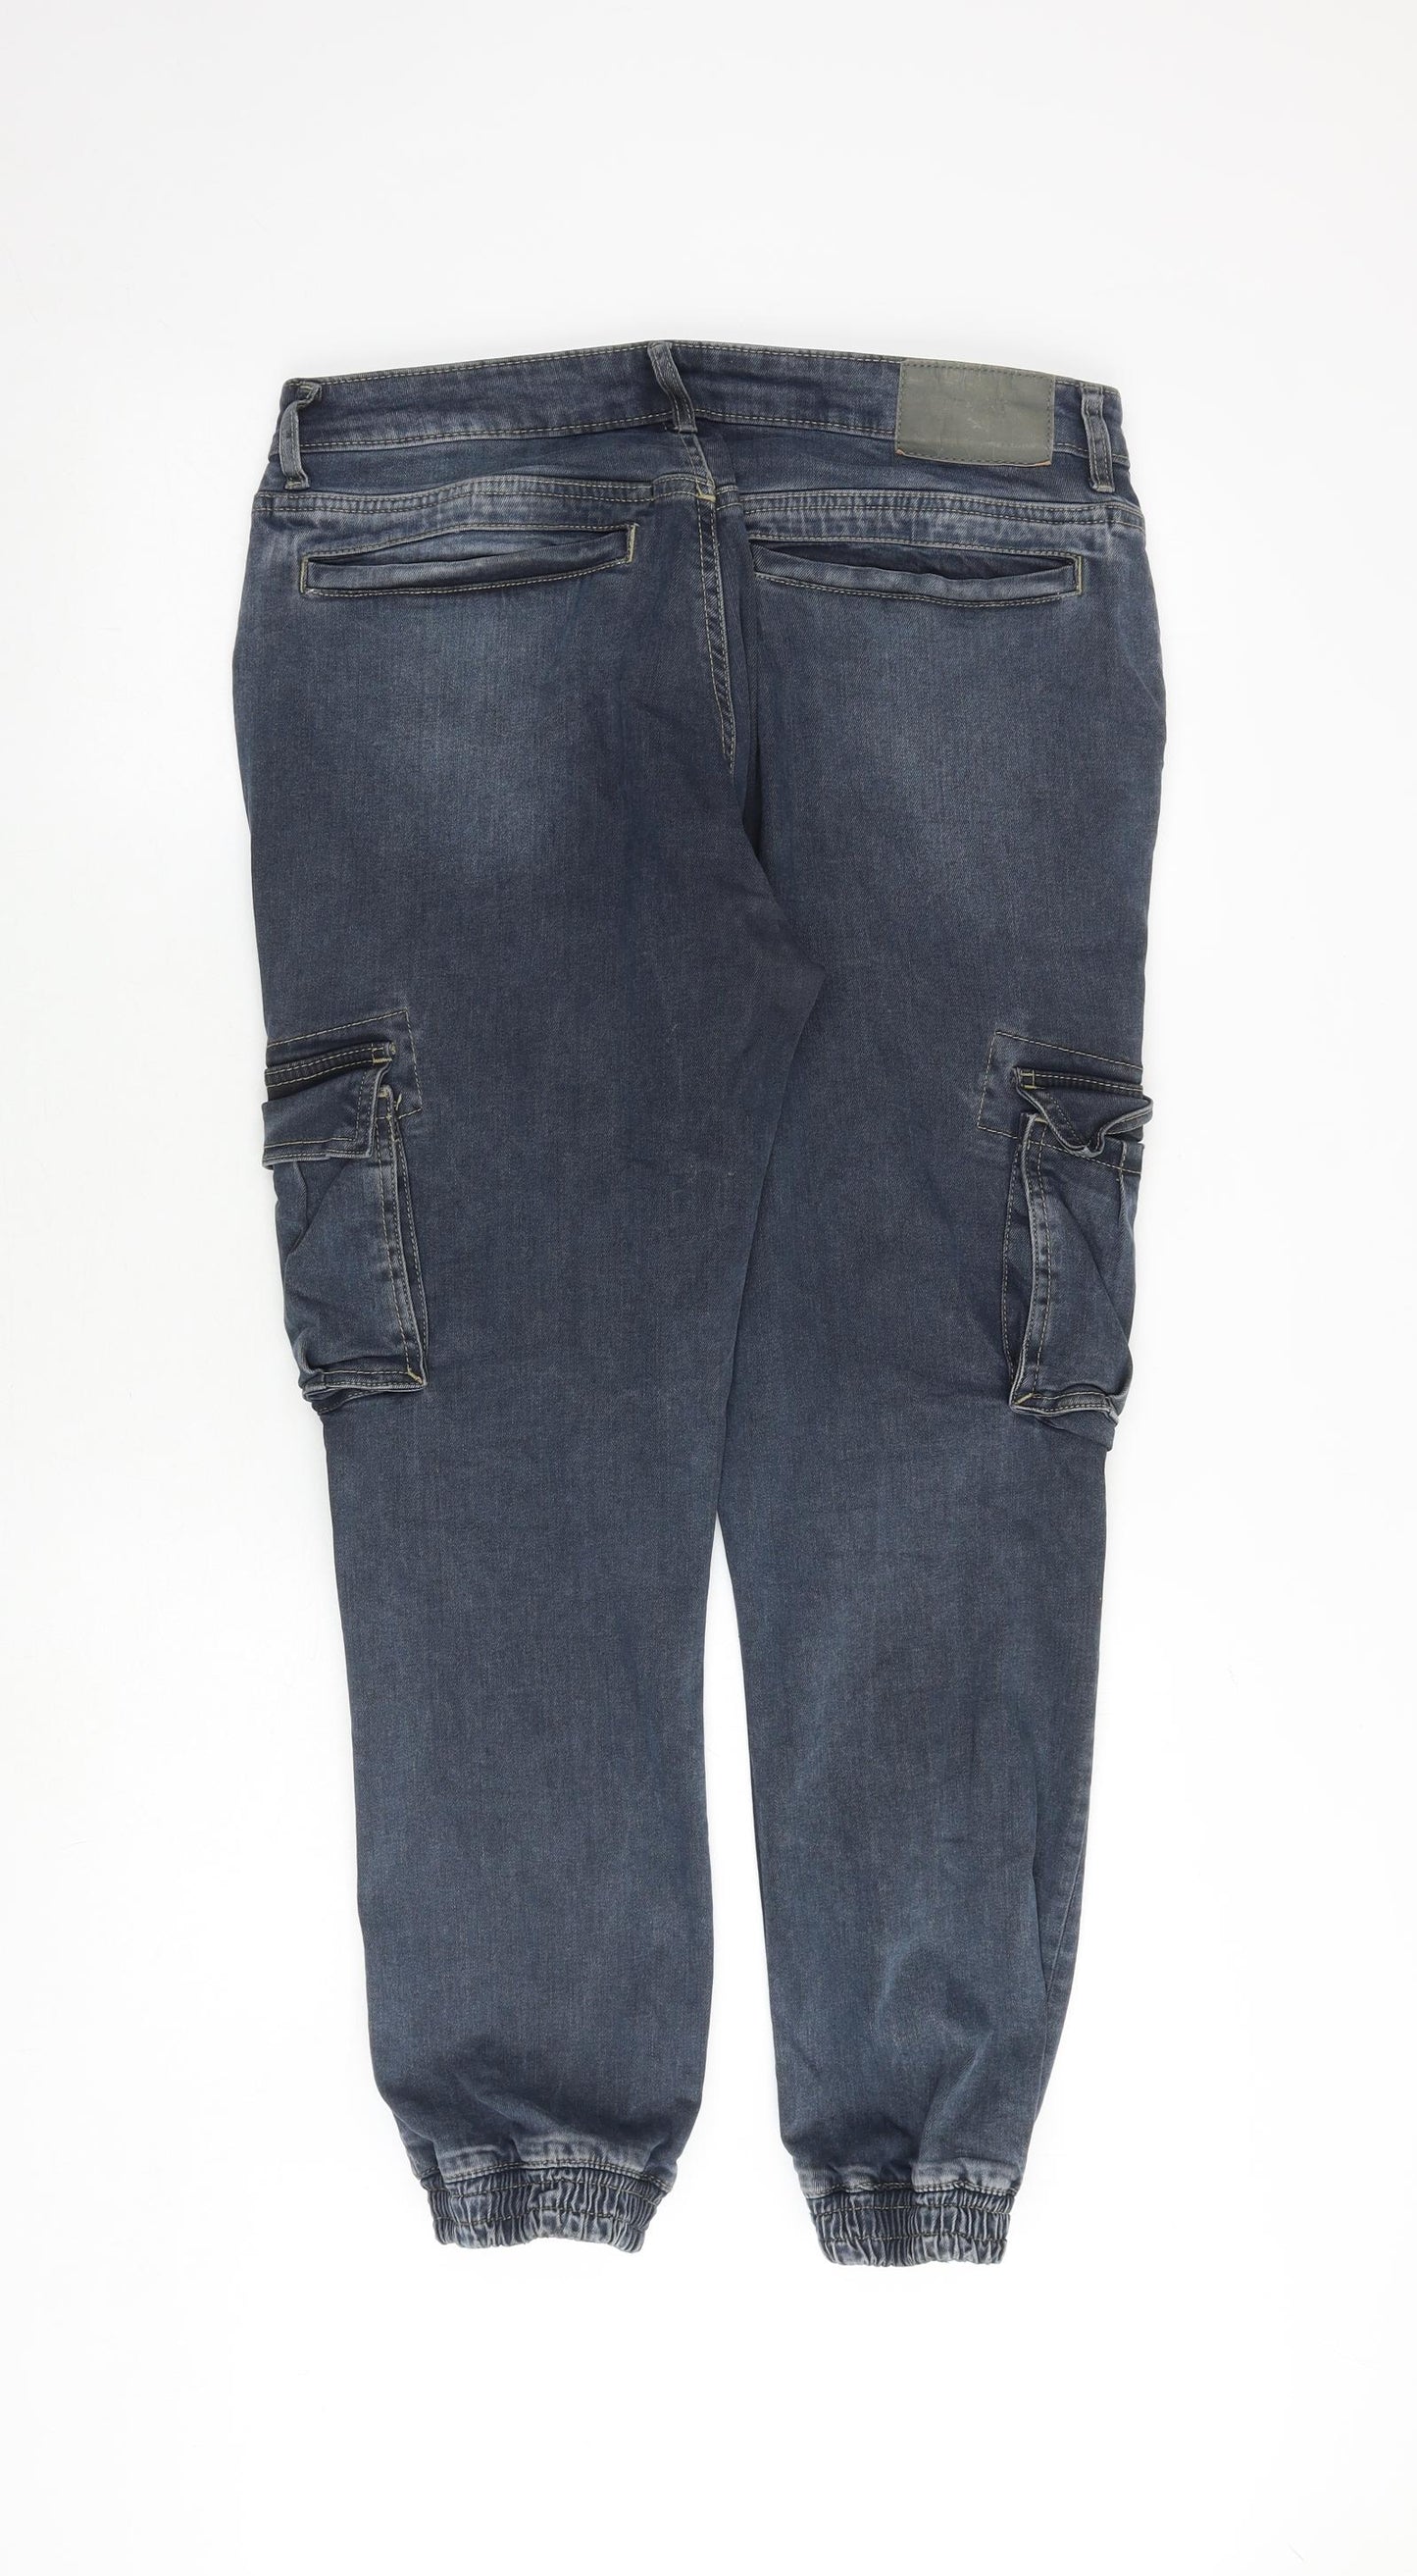 Denim & Co. Mens Blue Cotton Straight Jeans Size 34 in L32 in Regular Button - Cuff cargo